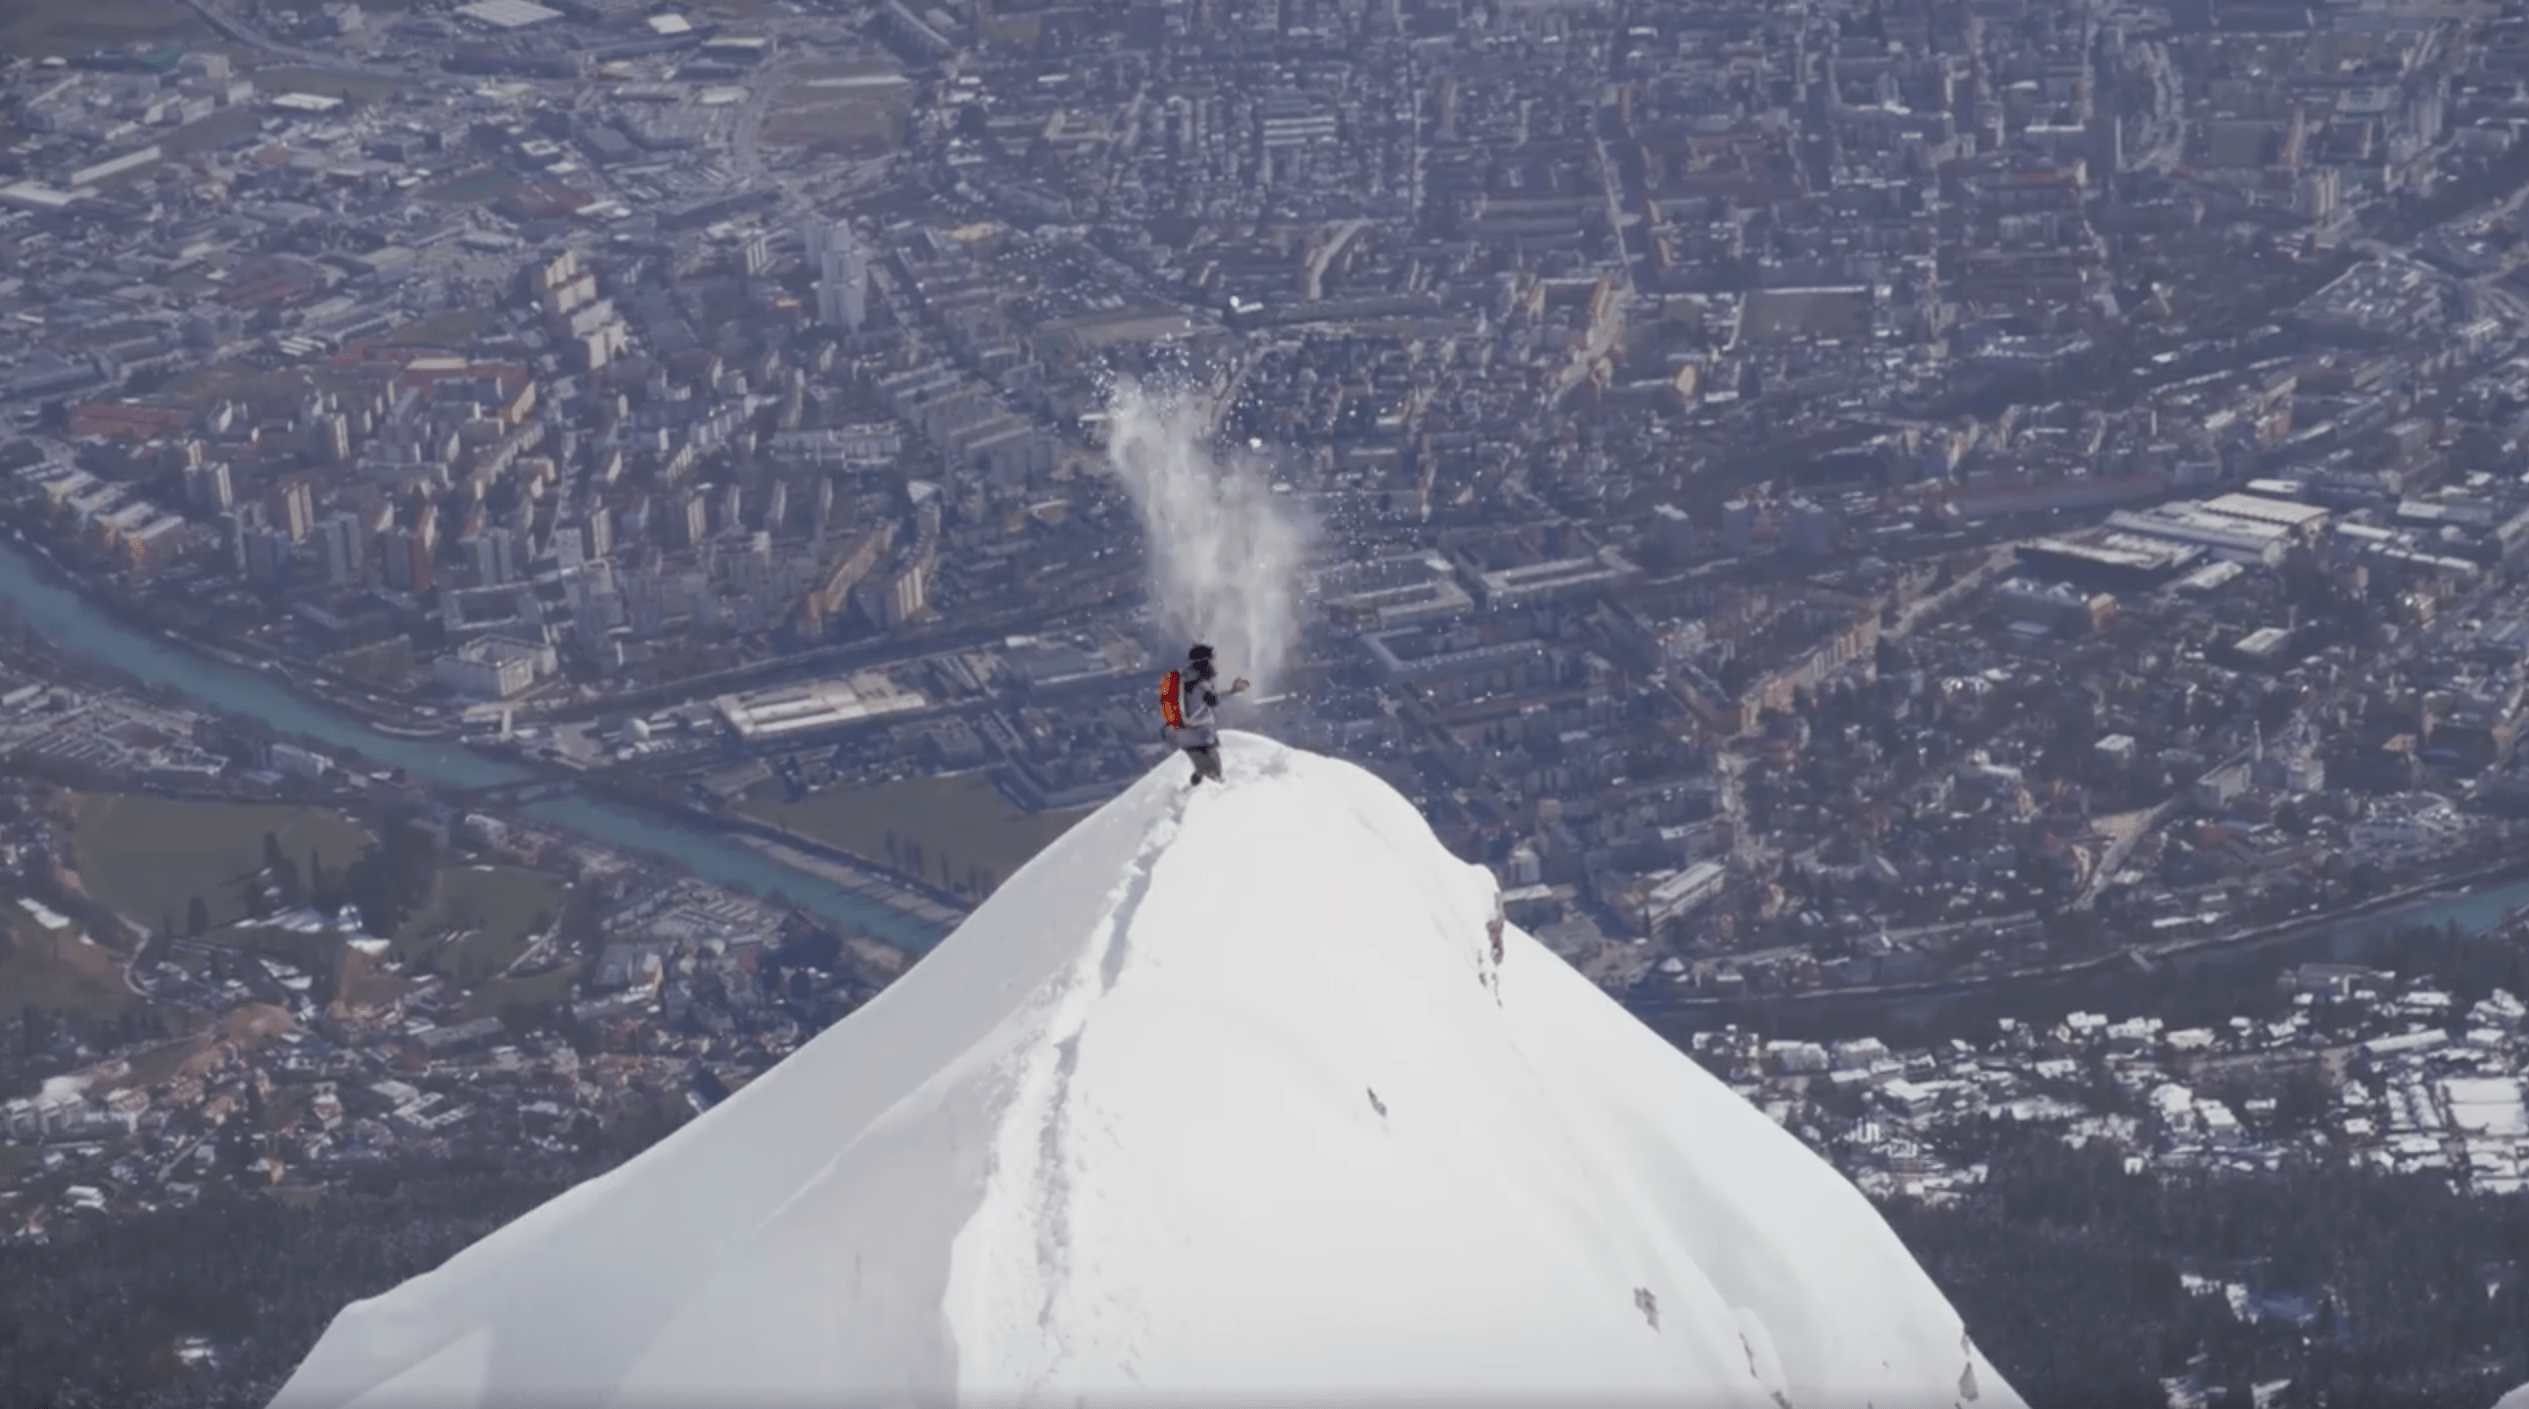 City in background provides Après ski oppurtunity 